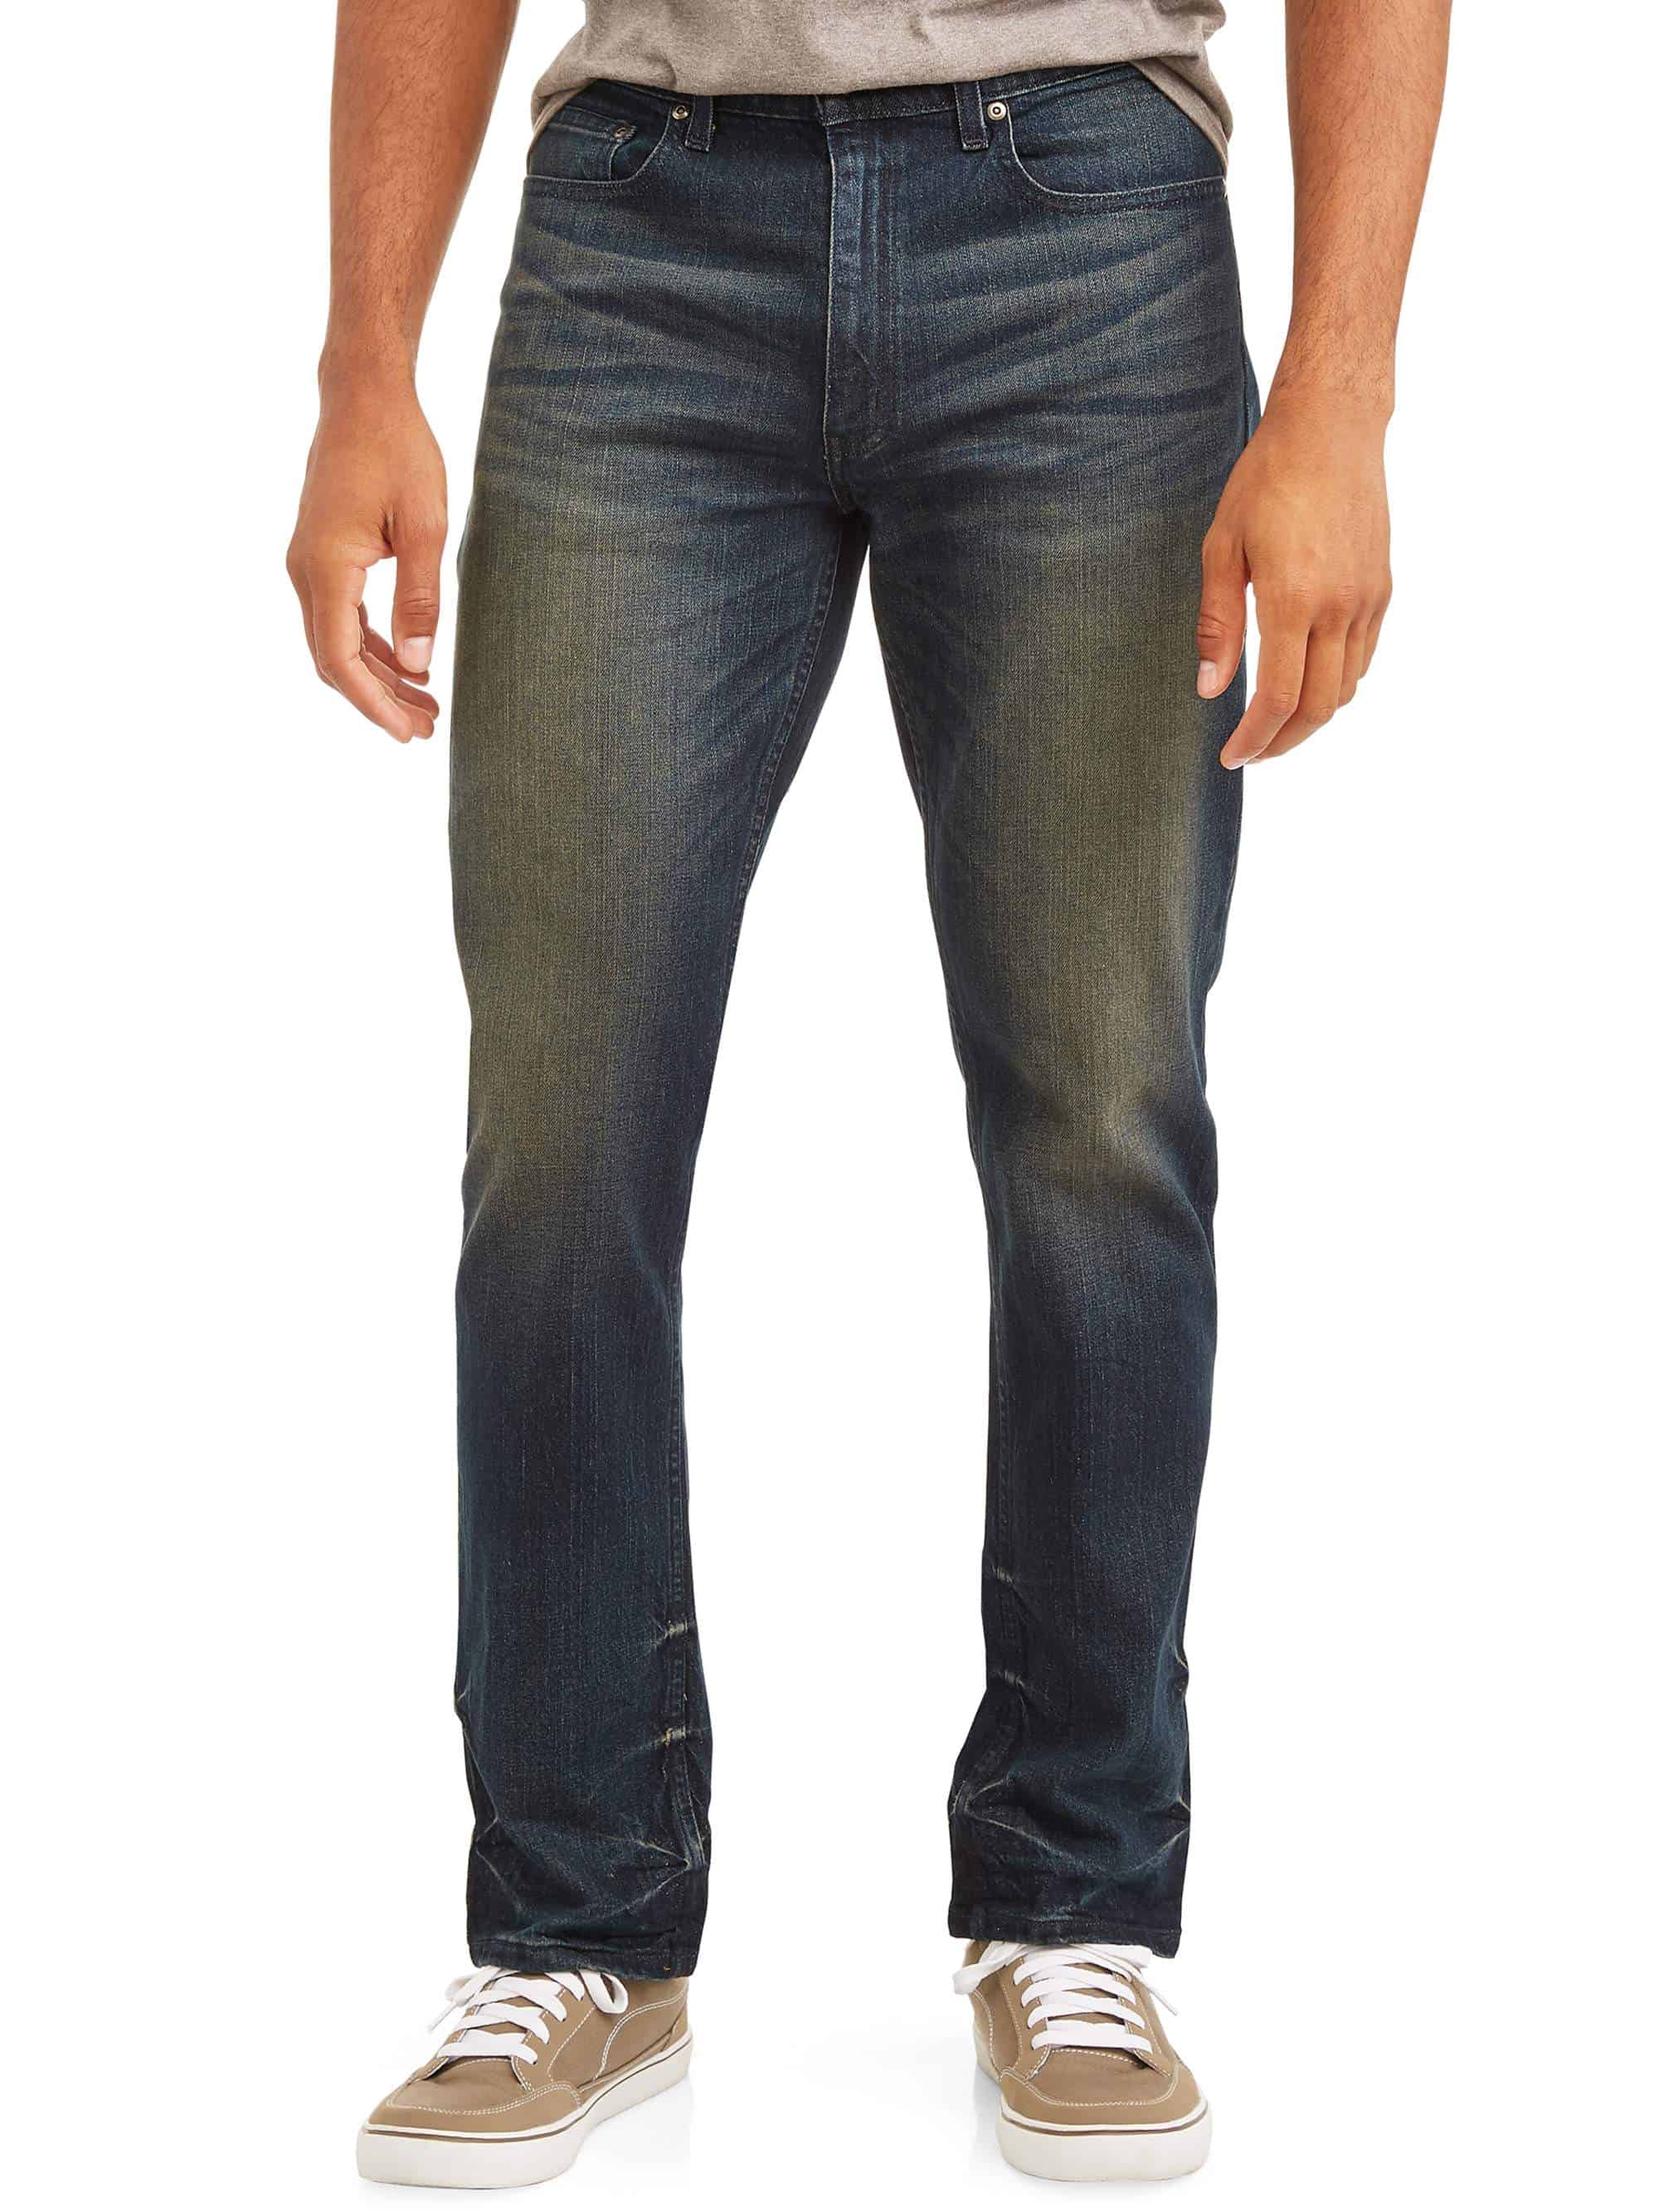 Walmart: George Men’s Athletic-Fit Jeans $11